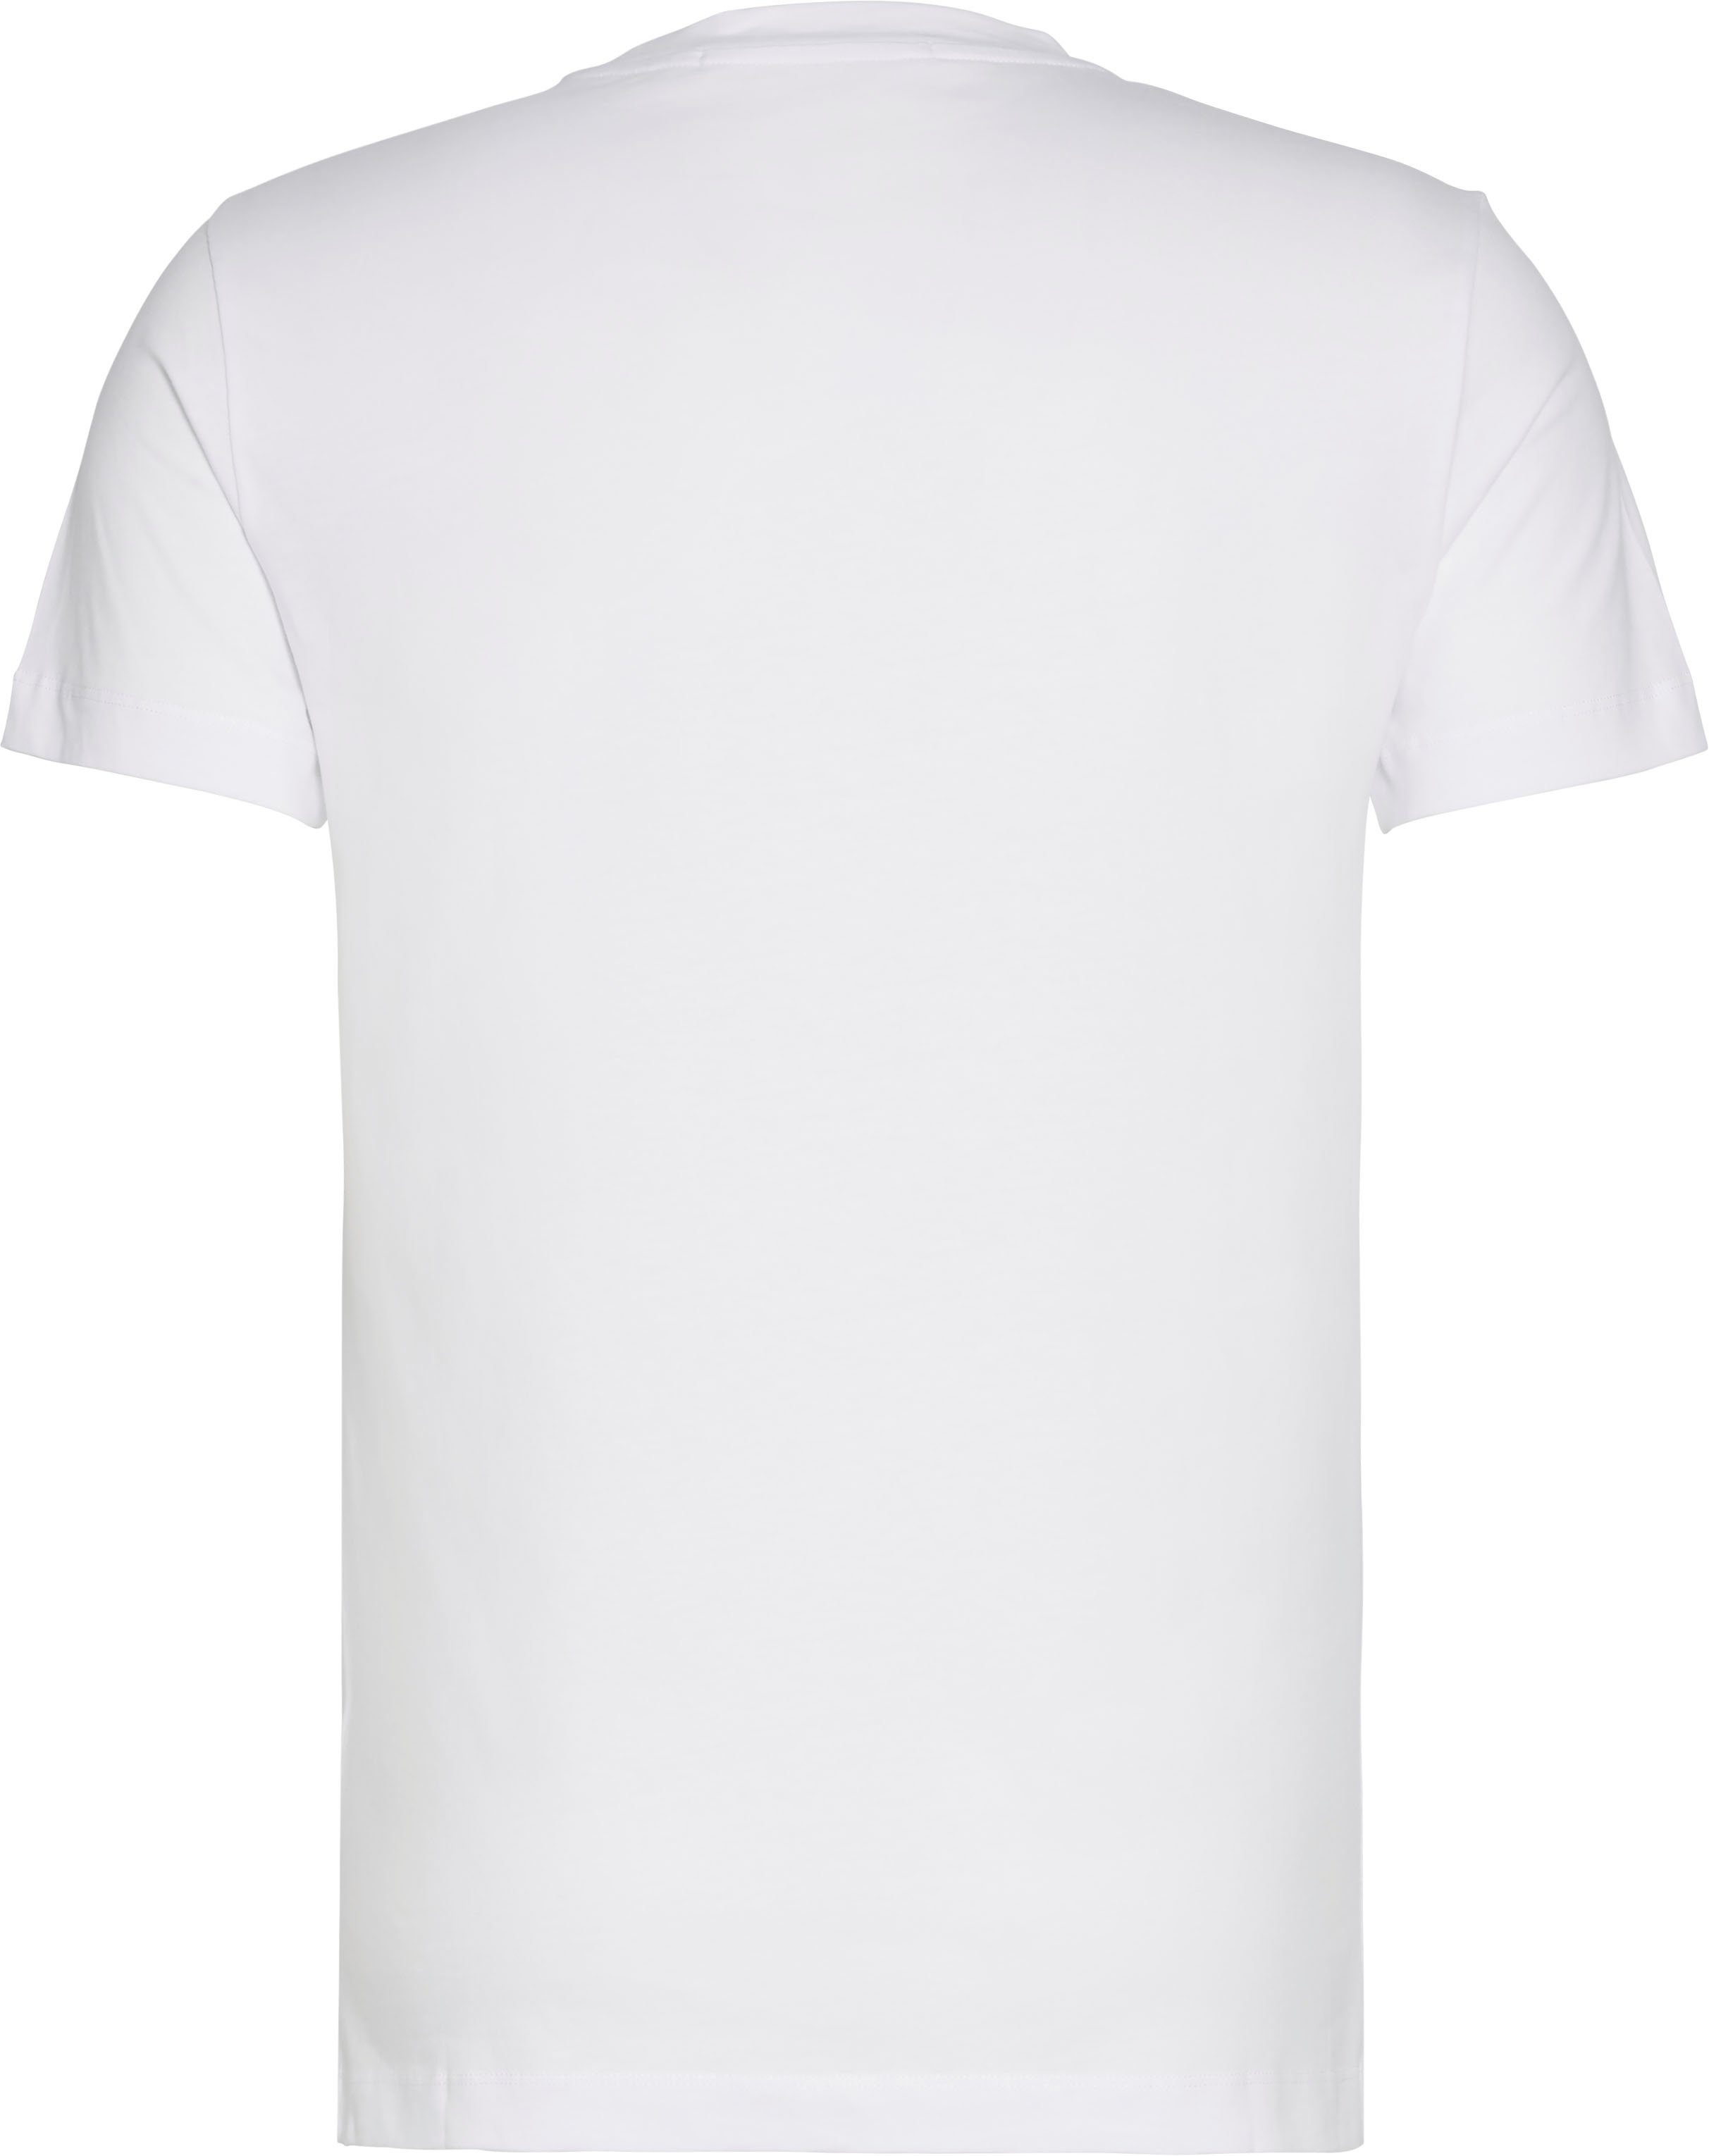 Jeans Bright ICONIC MONOGRAM Klein TEE Calvin SLIM White T-Shirt